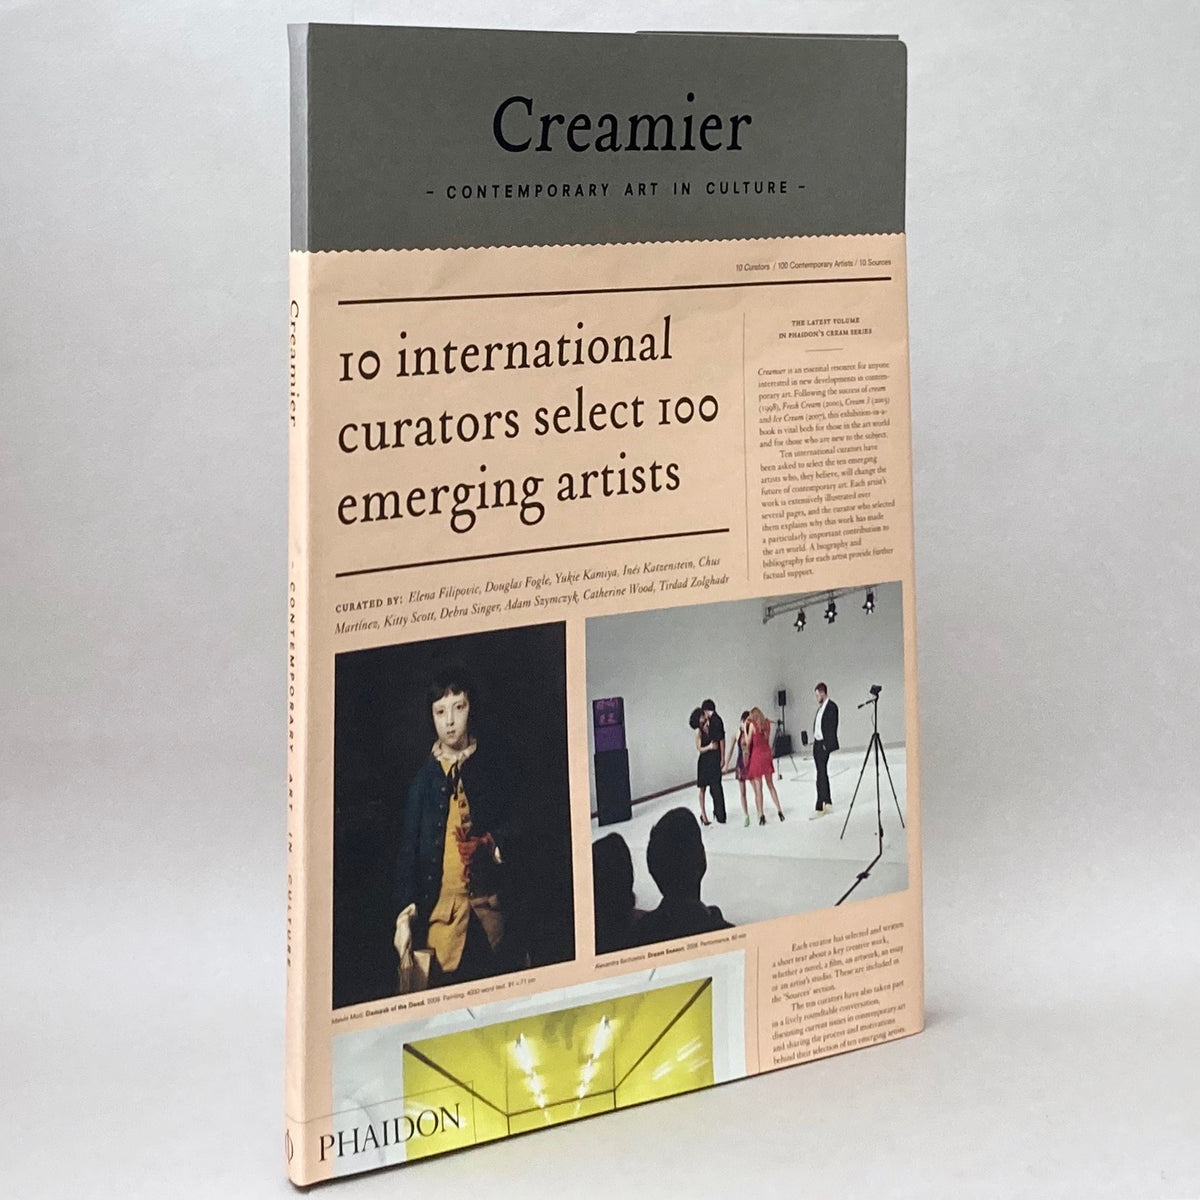 Creamier: Contemporary Art in Culture